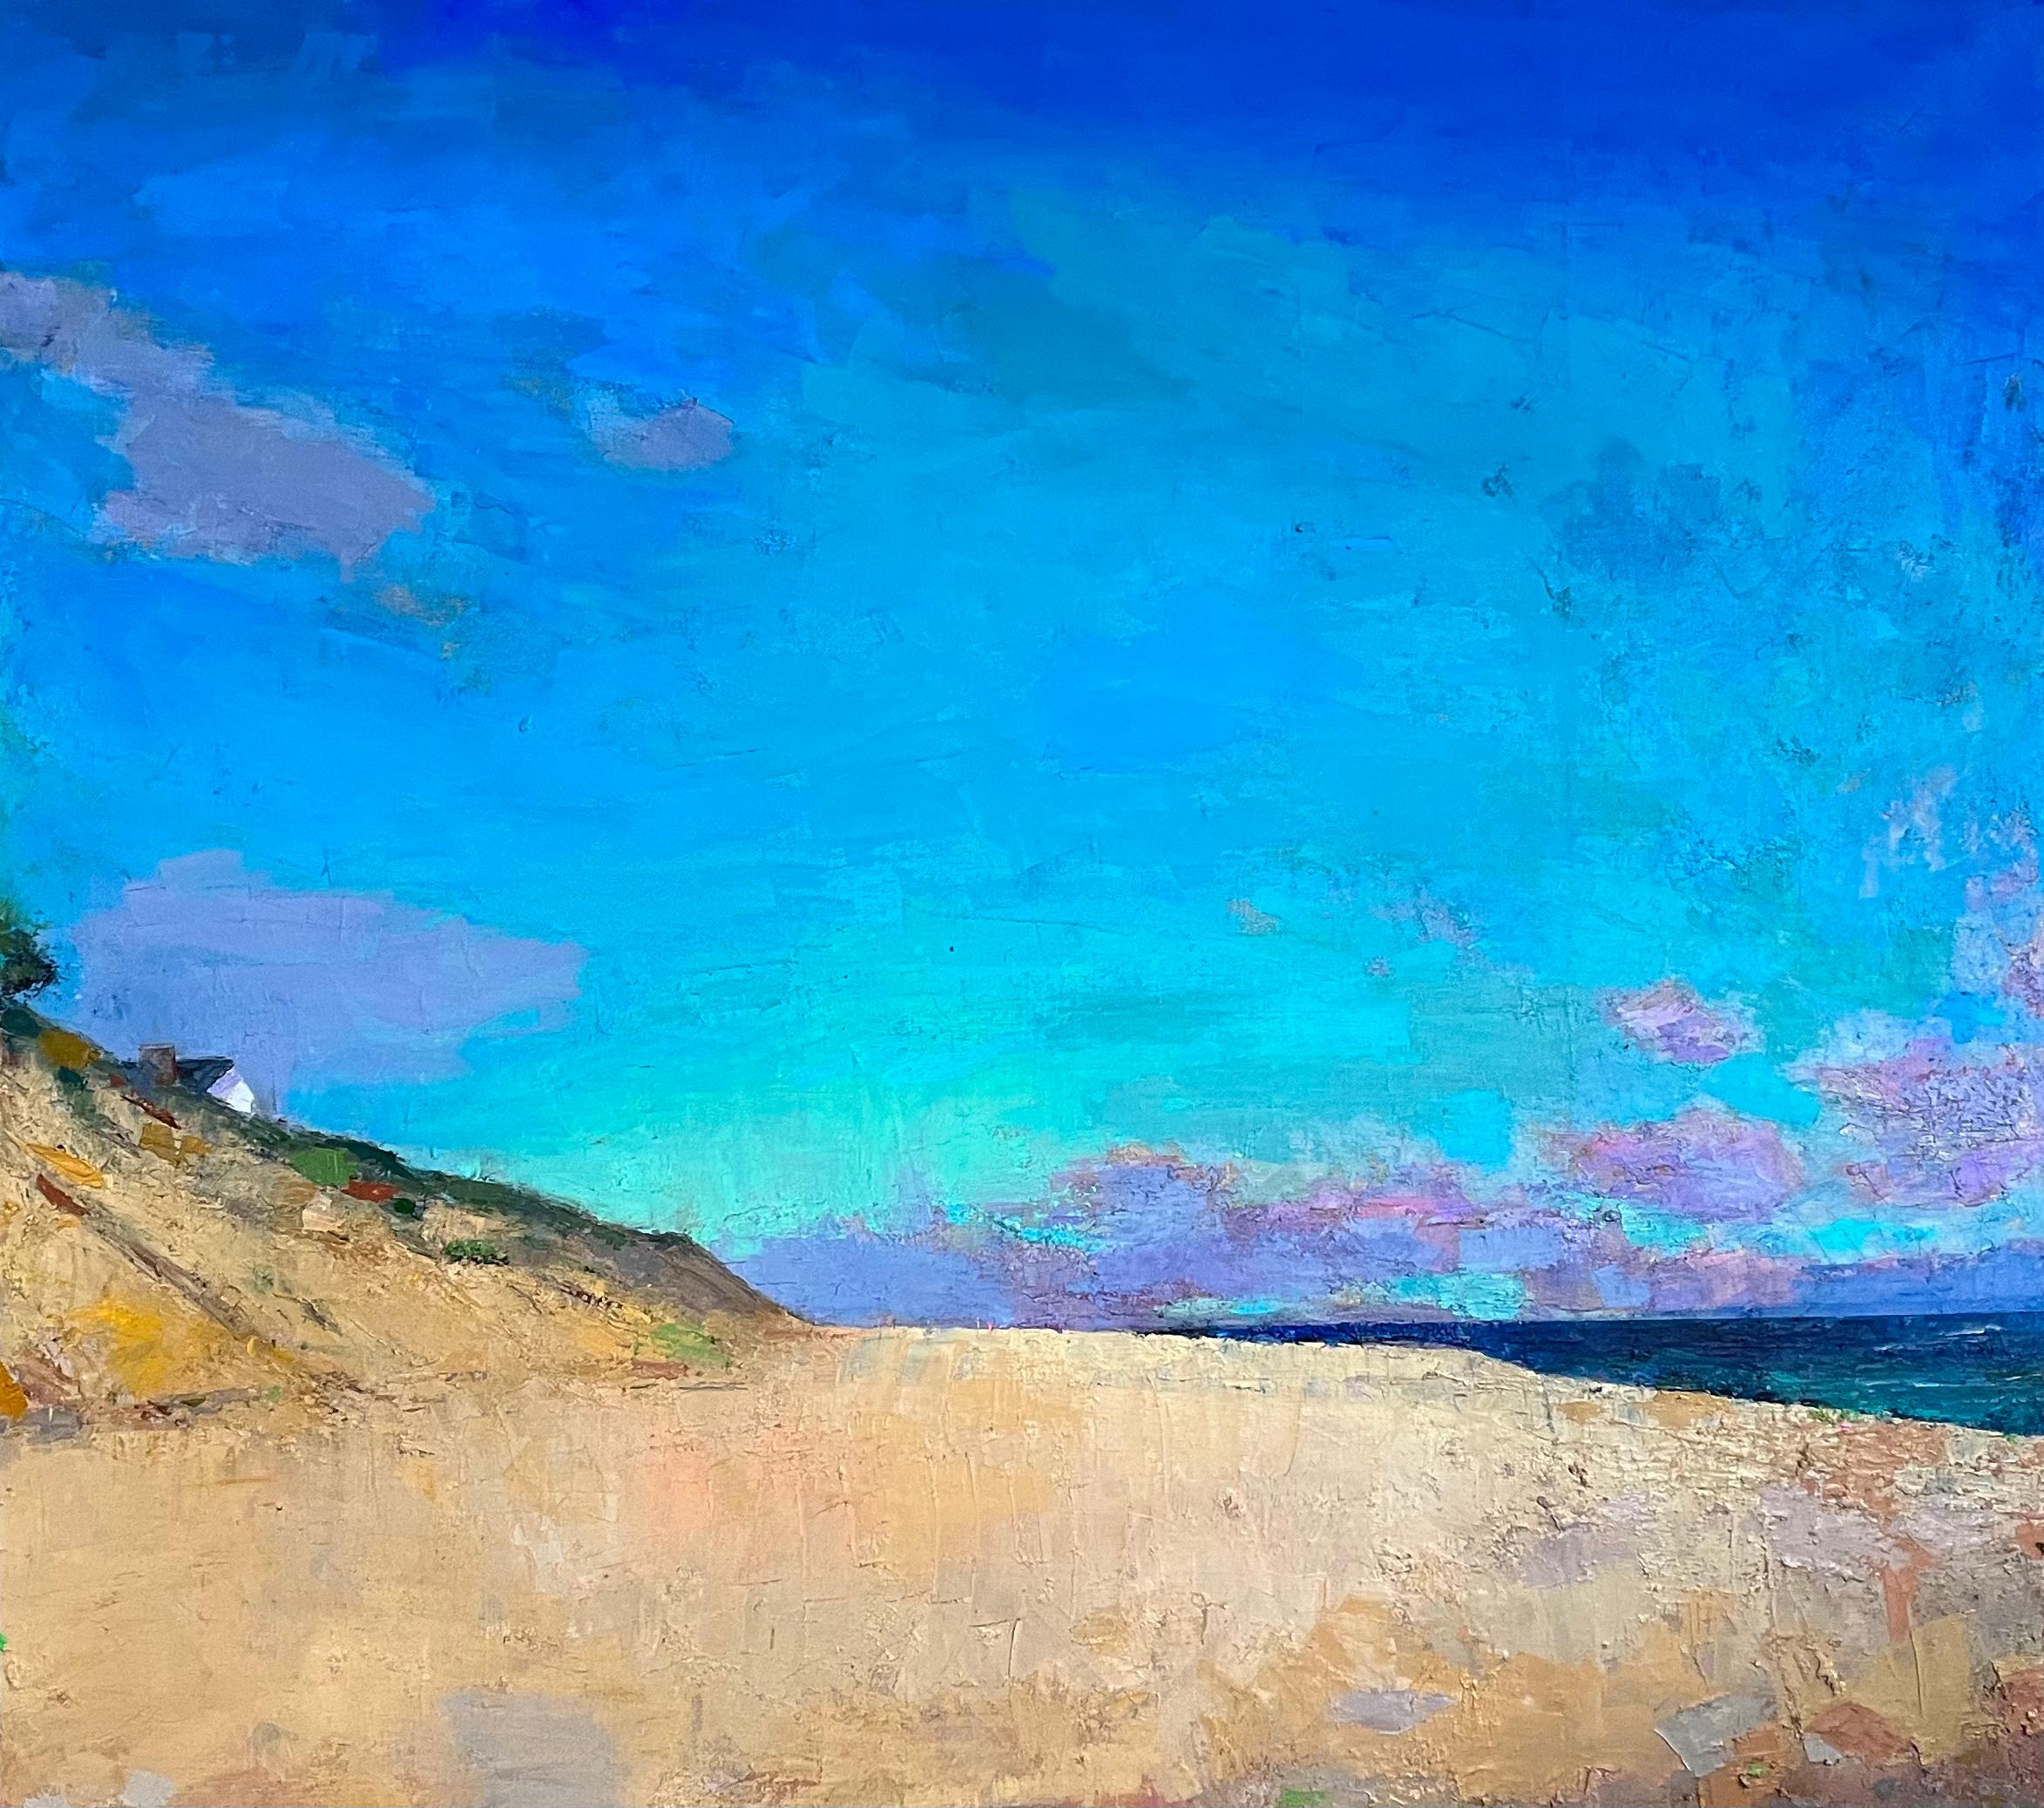 Larry Horowitz Landscape Painting – "Plein Air Morning" Ölgemälde vom Strand mit lebhaftem blauem Himmel 